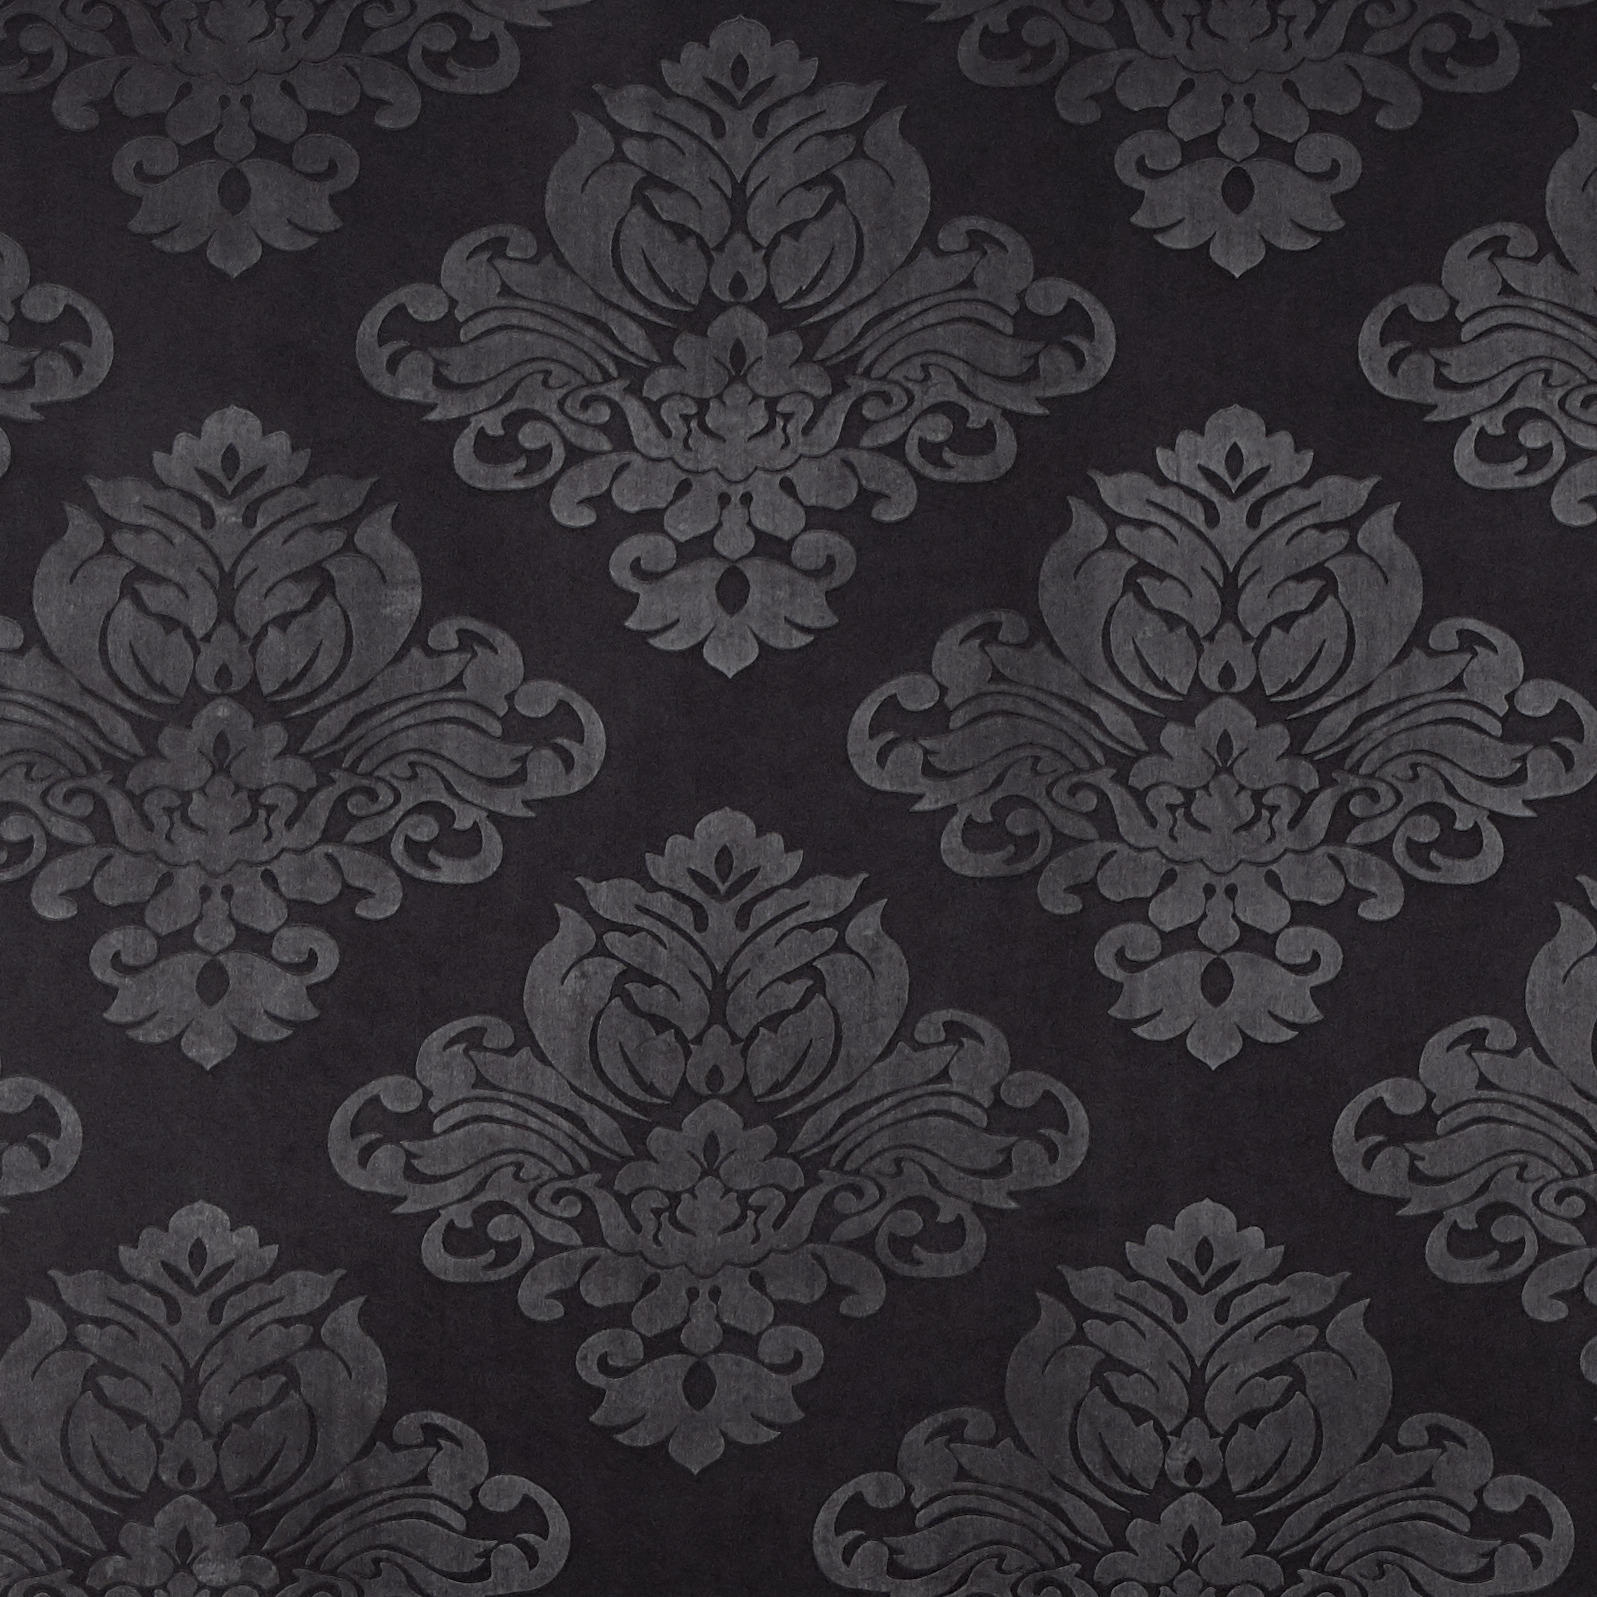 GARDINLÄNGD black-out (mörkläggande)  - svart, Klassisk, textil (135/245cm) - Boxxx